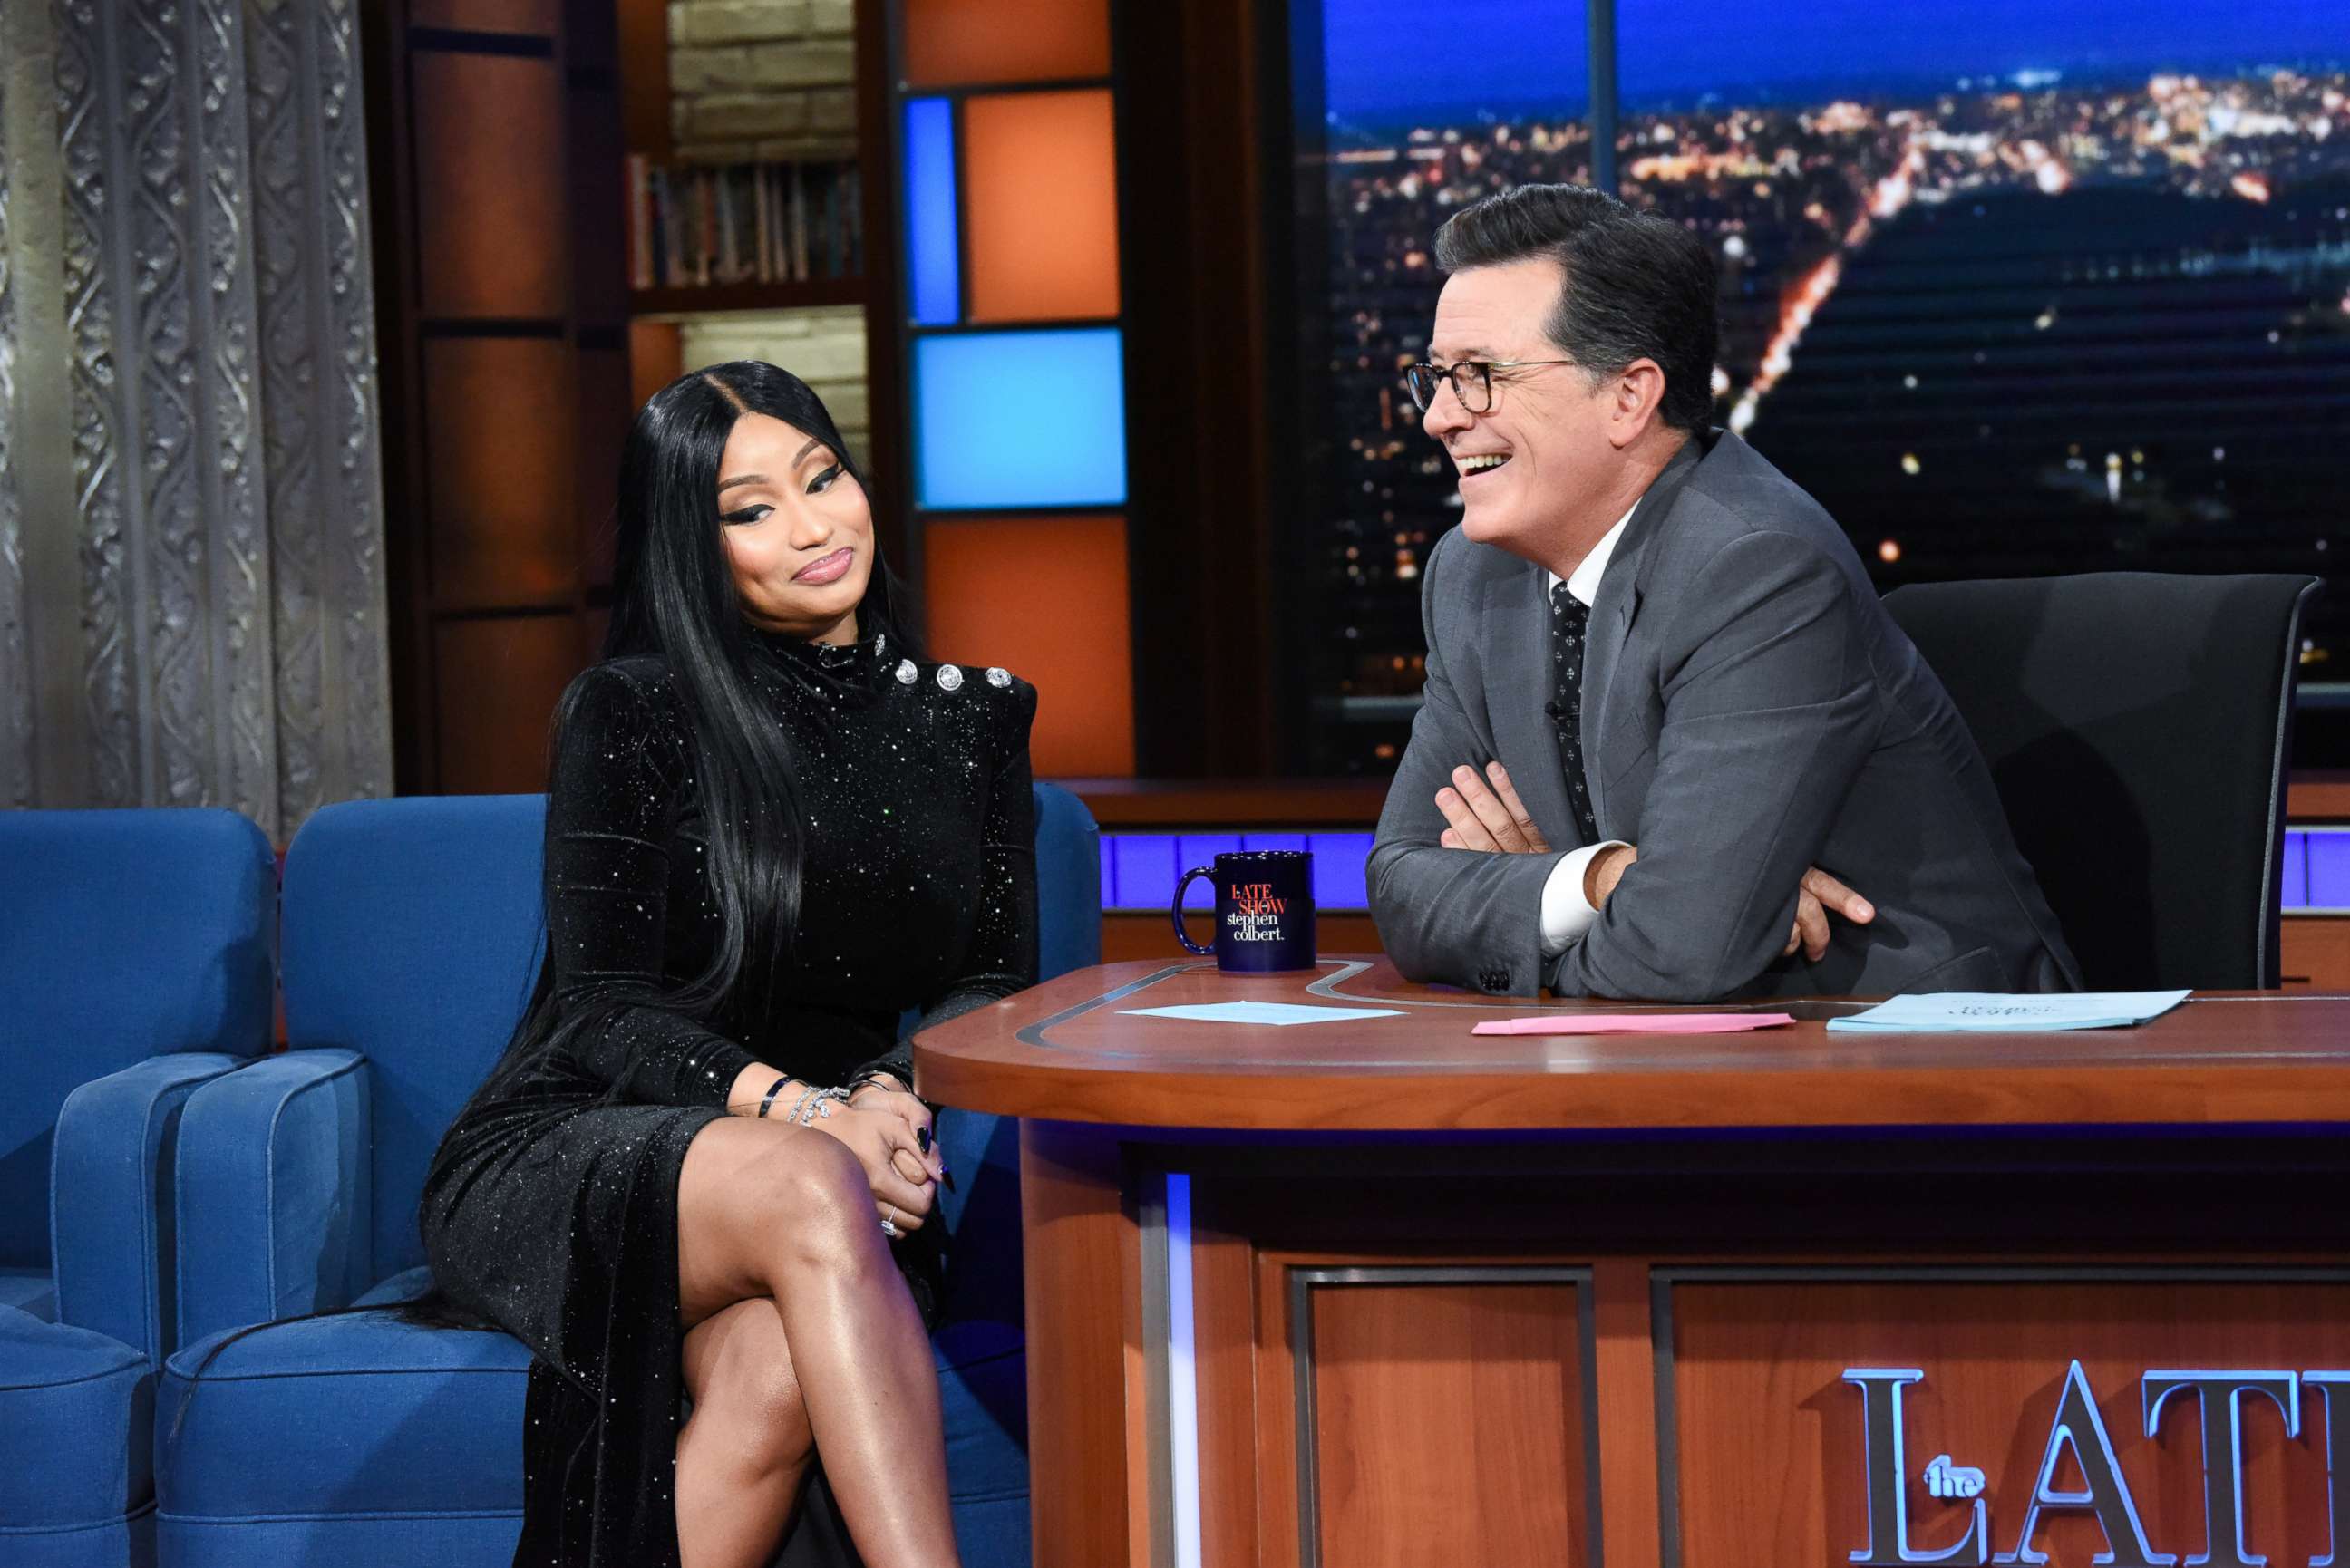 PHOTO: Stephen Colbert asked Nicki Minaj to freestyle a rap verse about him on Monday.